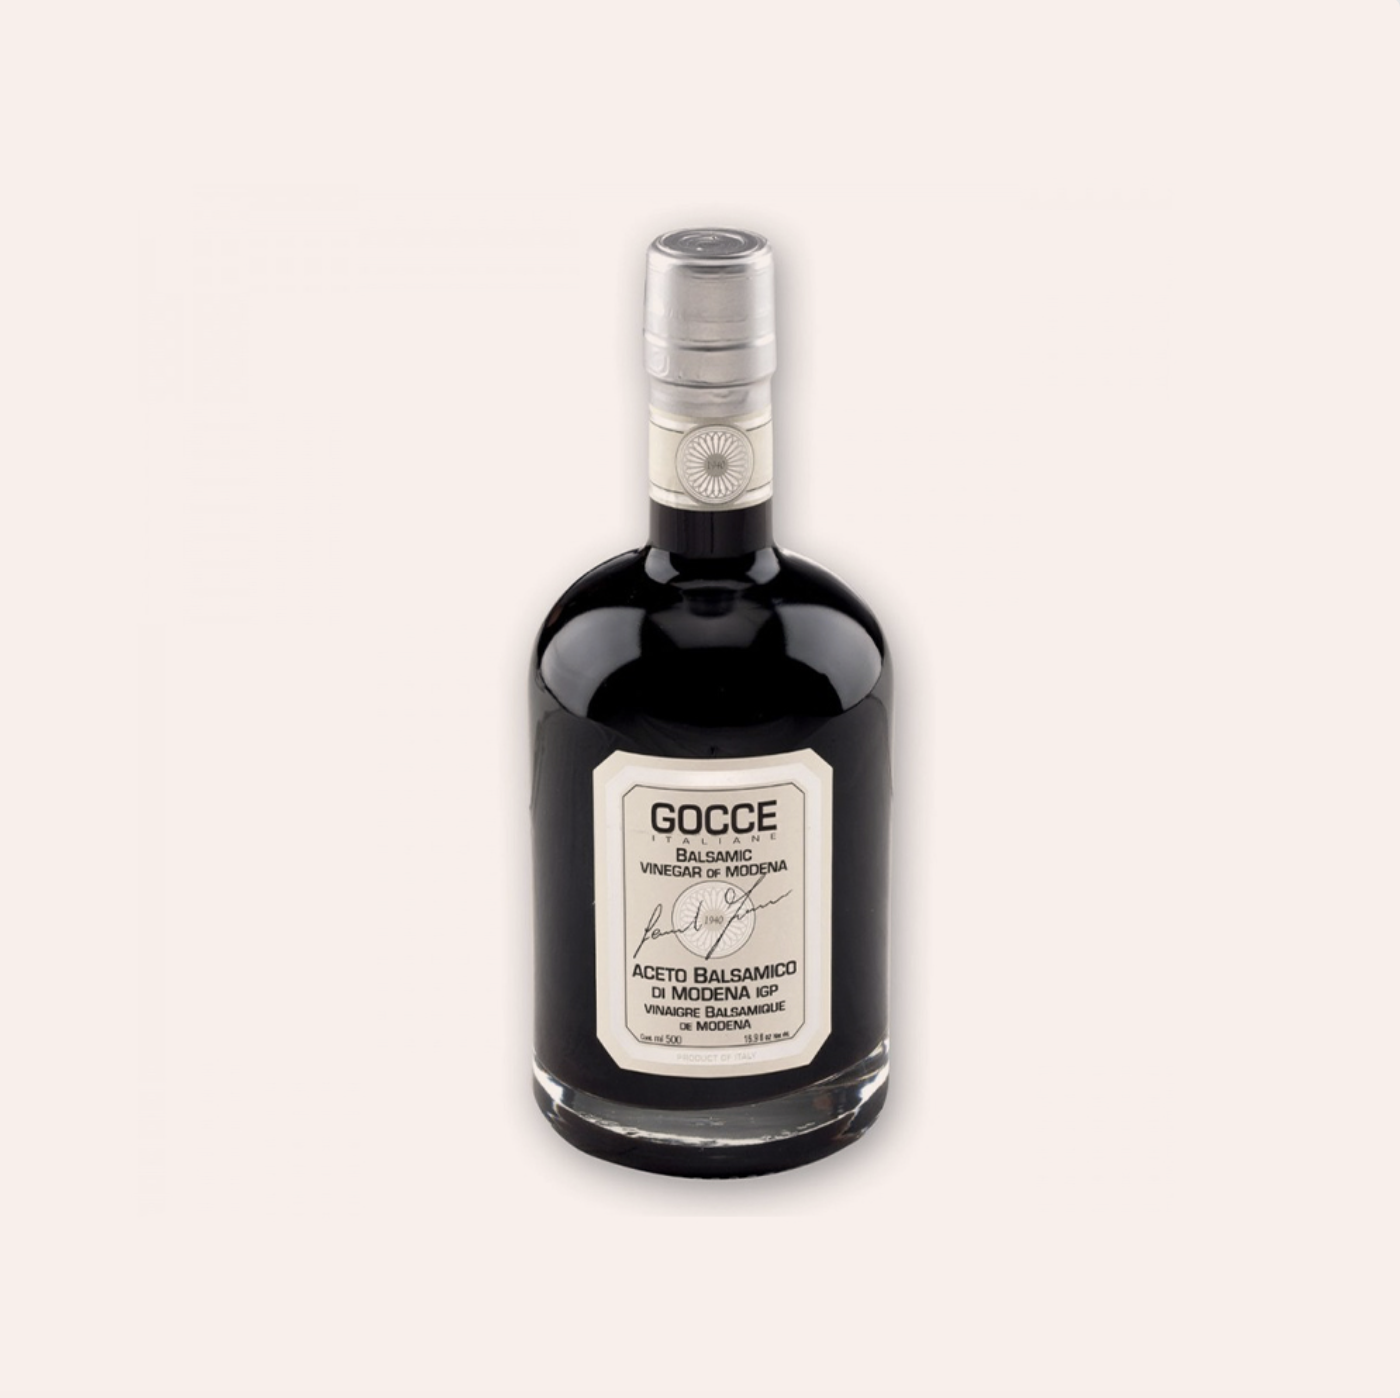 leonardi-gocce-500ml-bottigliabassa